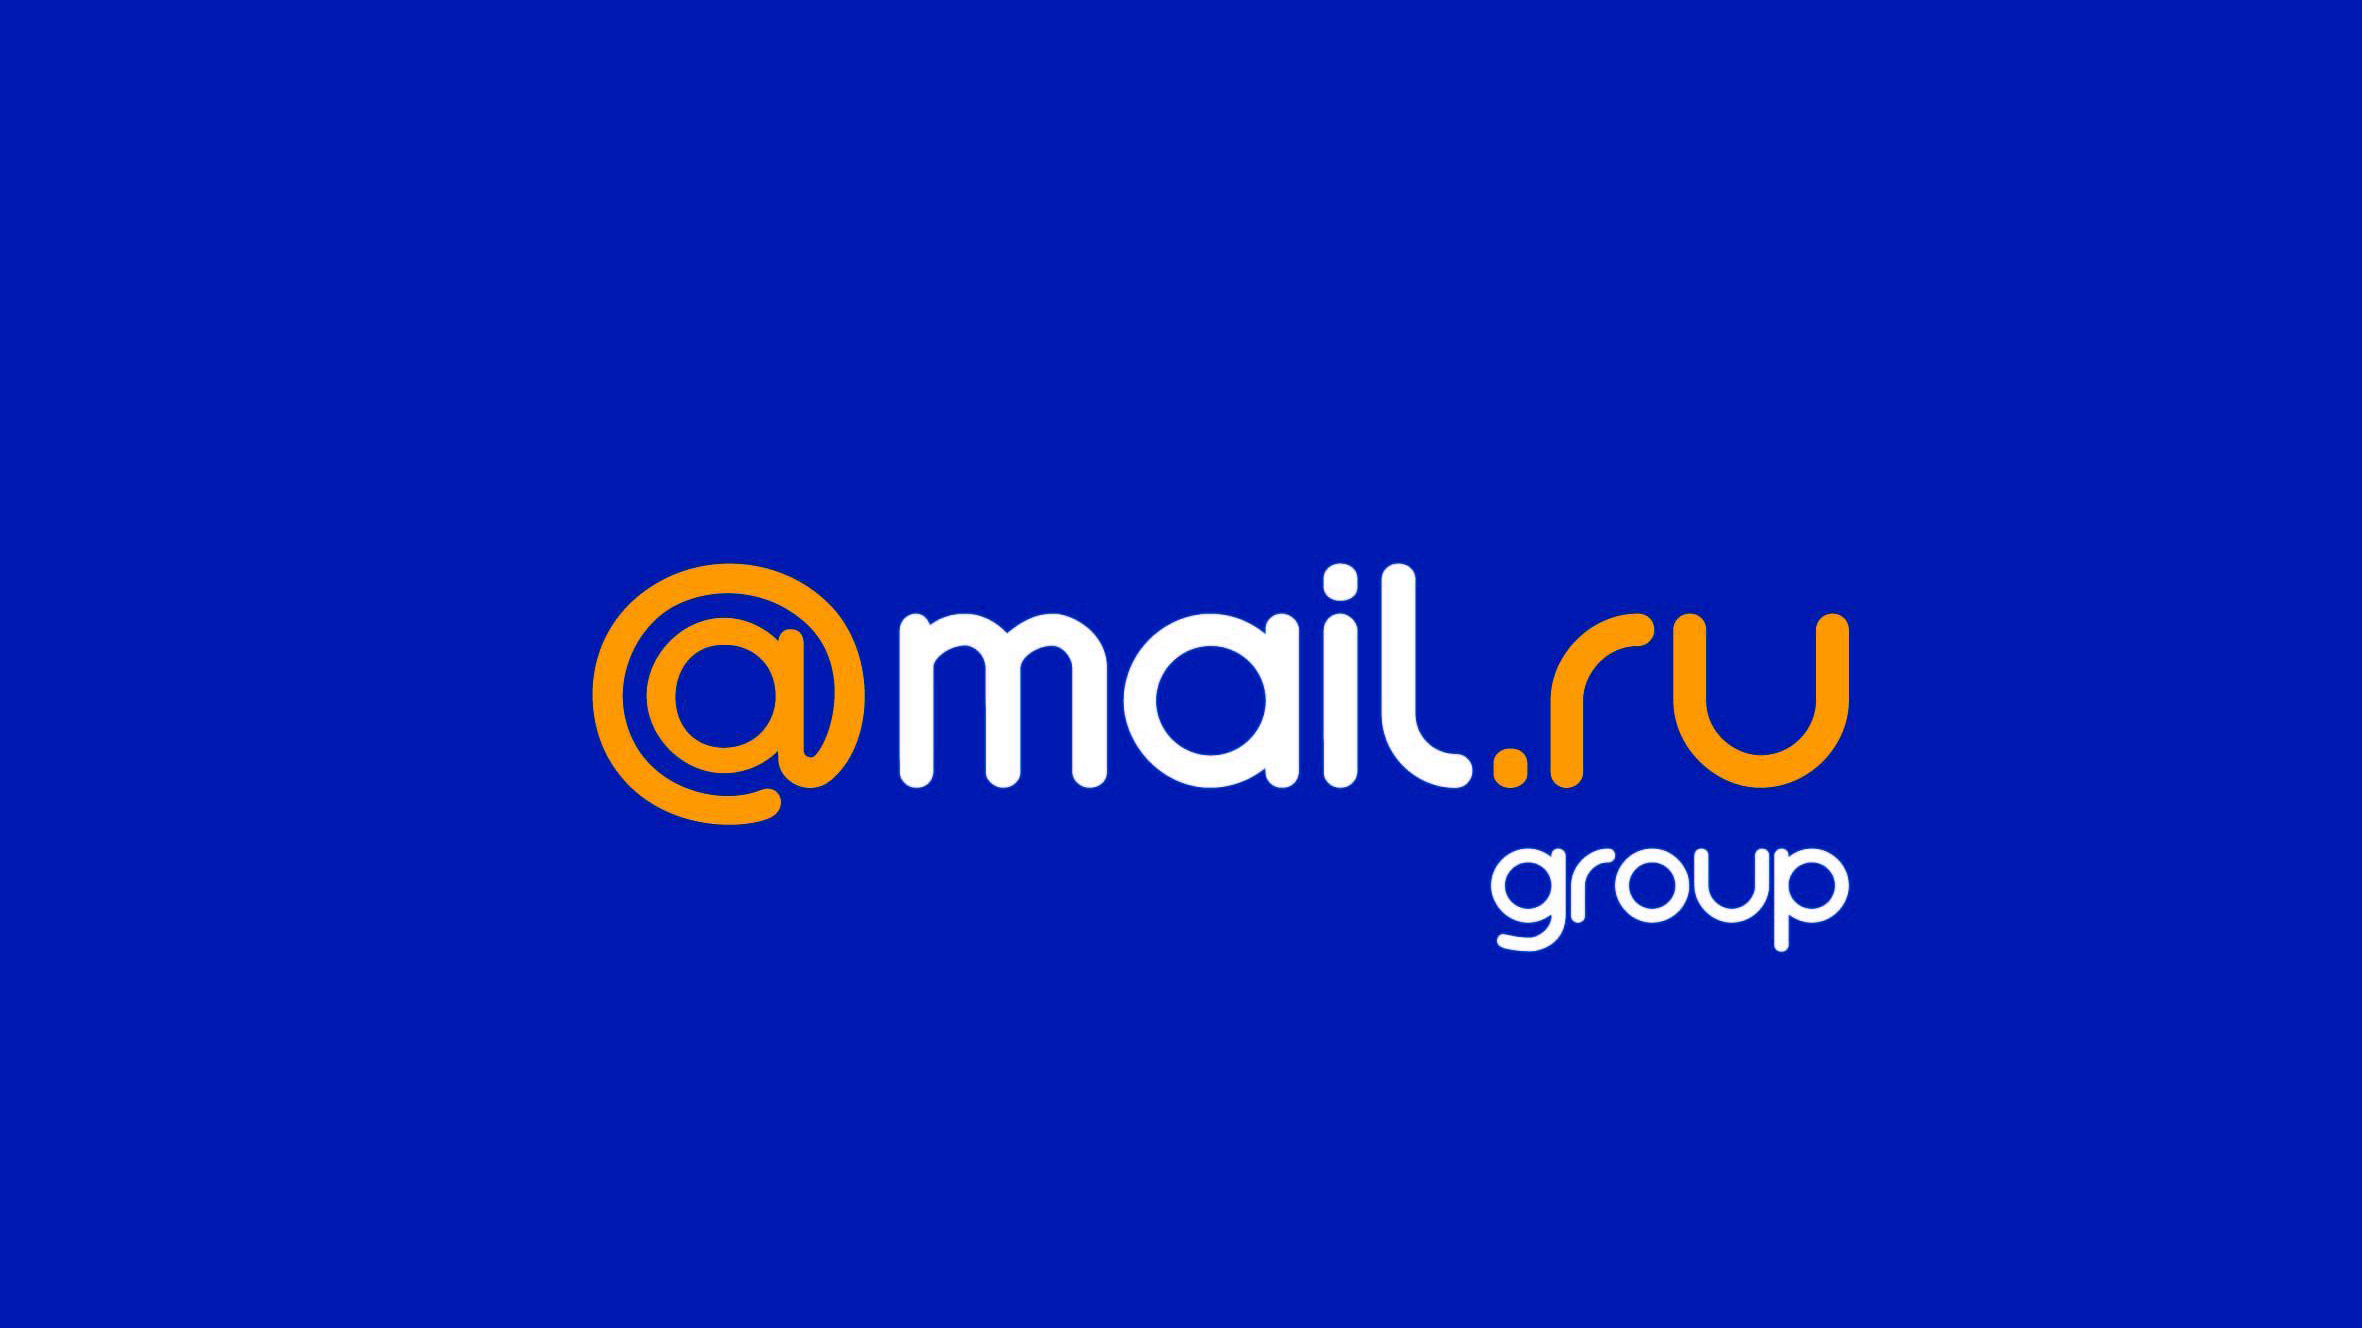 Day mail ru. Mail.ru Group логотип. Почта майл ру. Логотип почты майл ру.